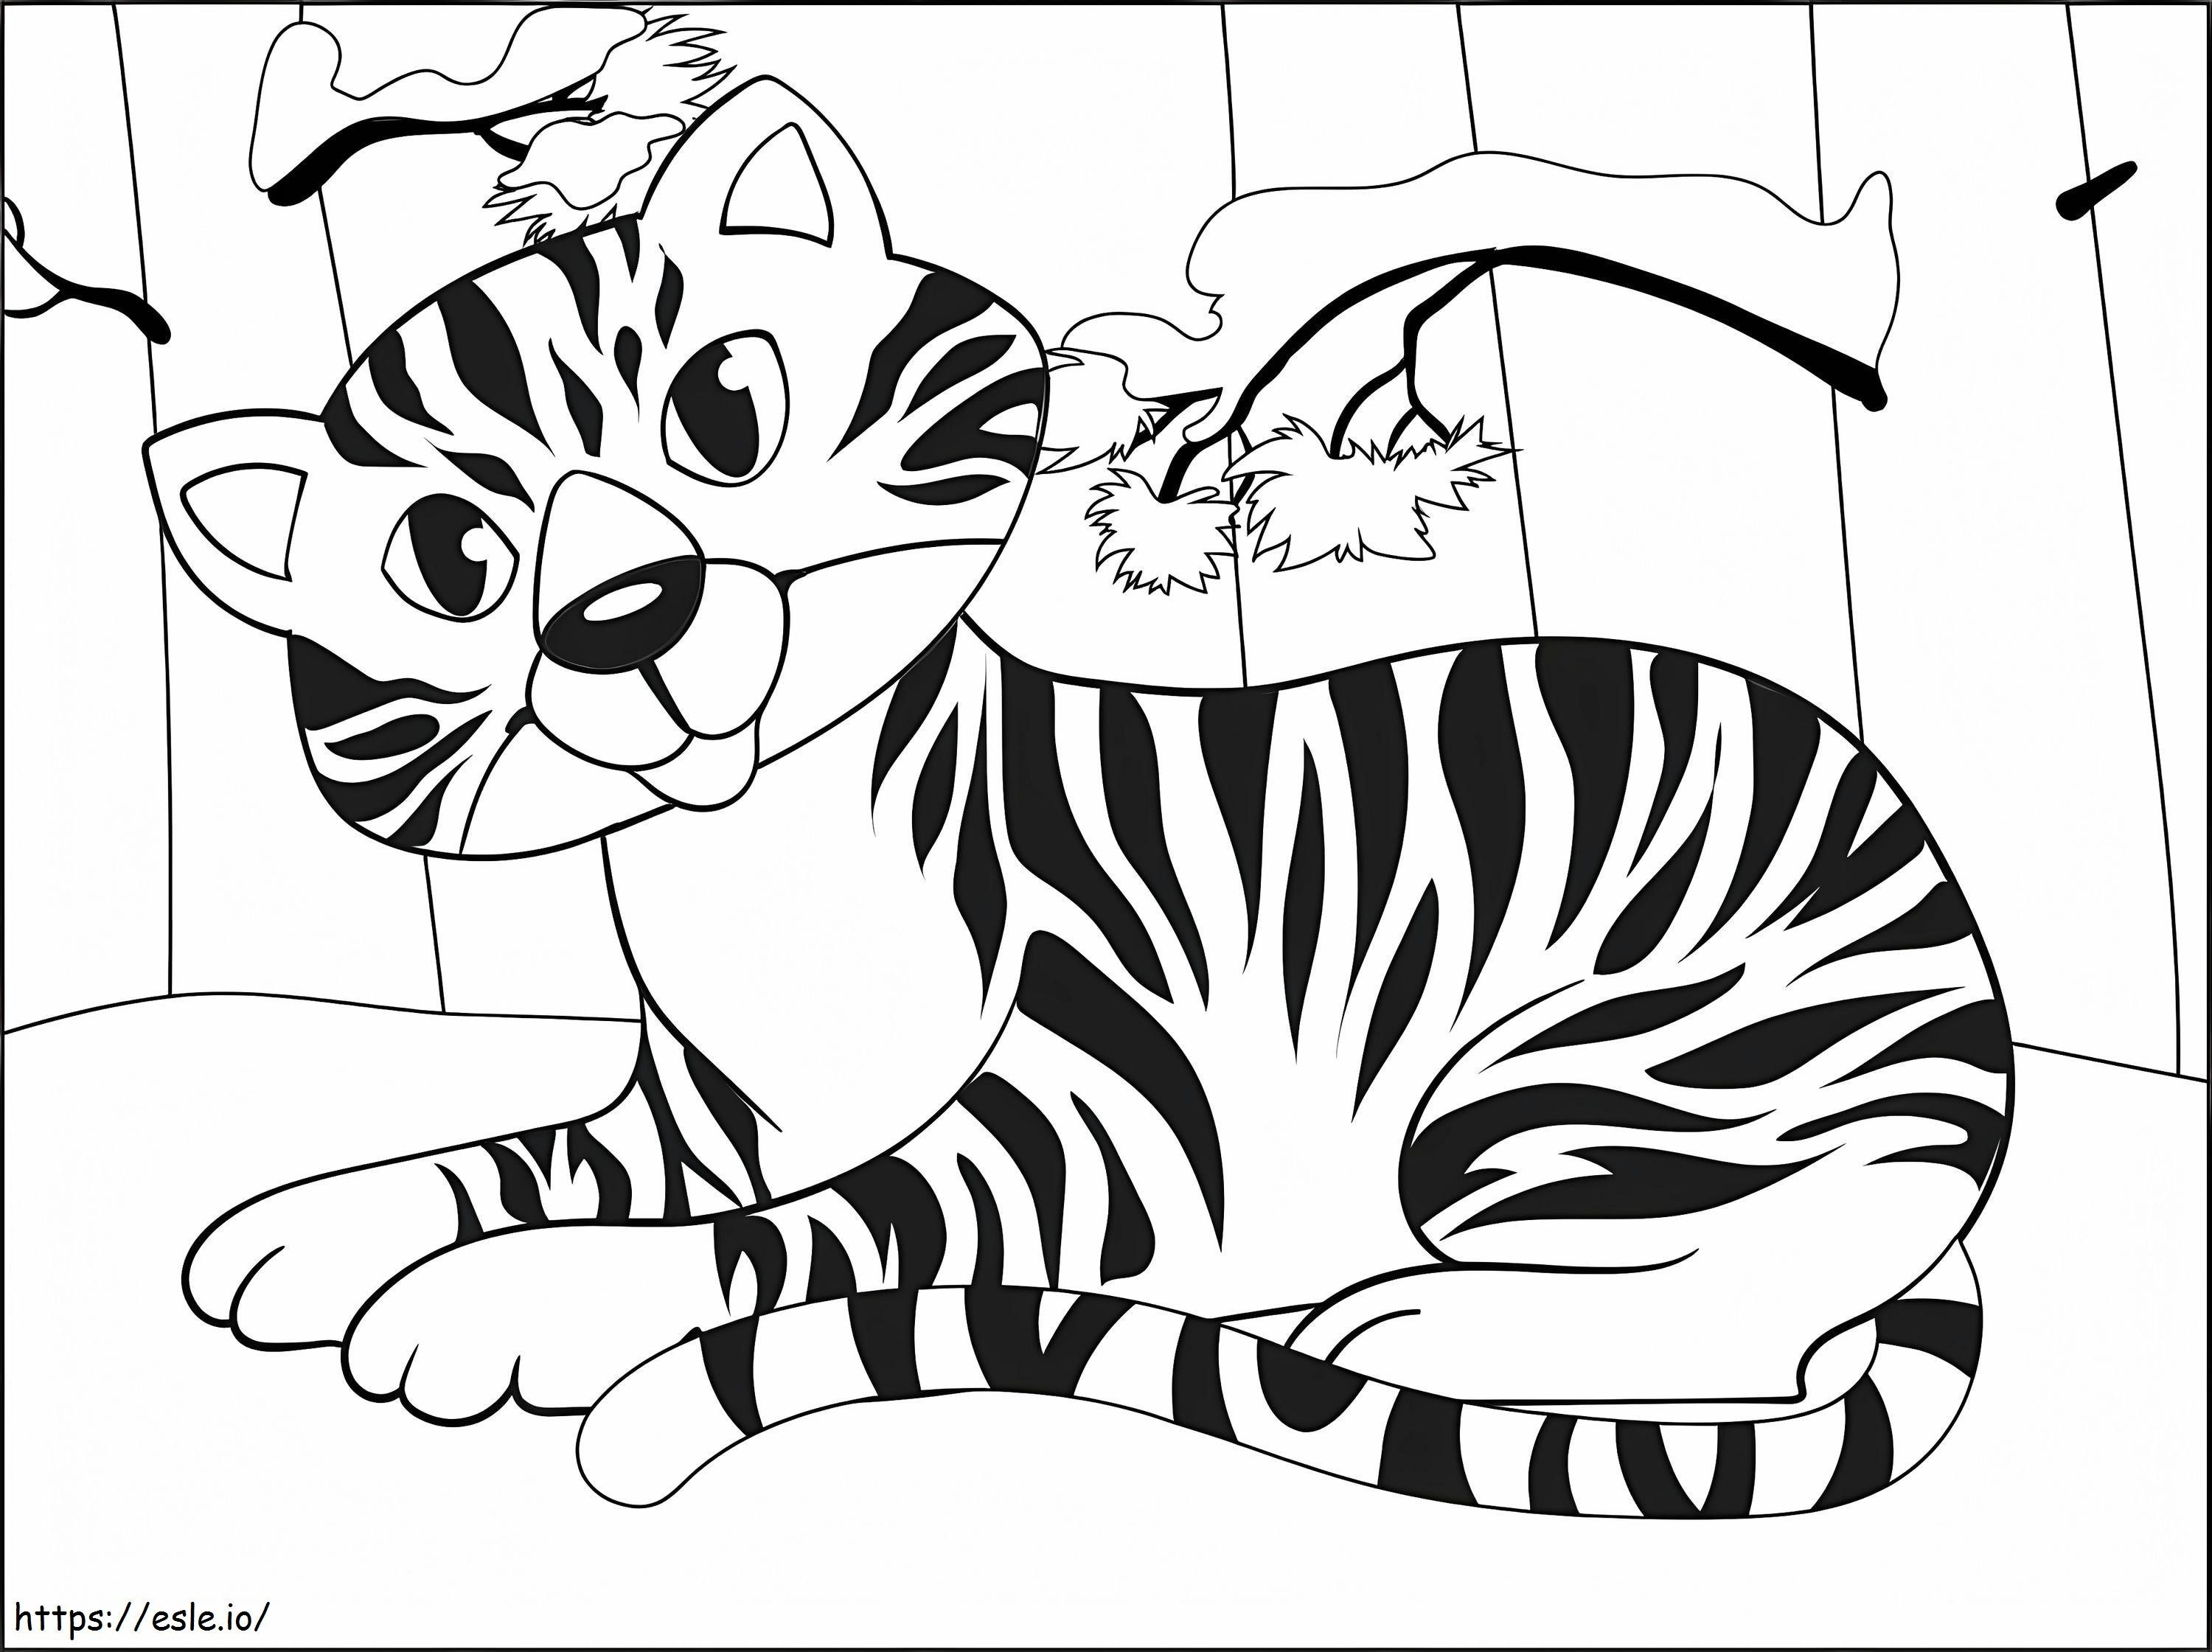 Tigre pequeno para colorir